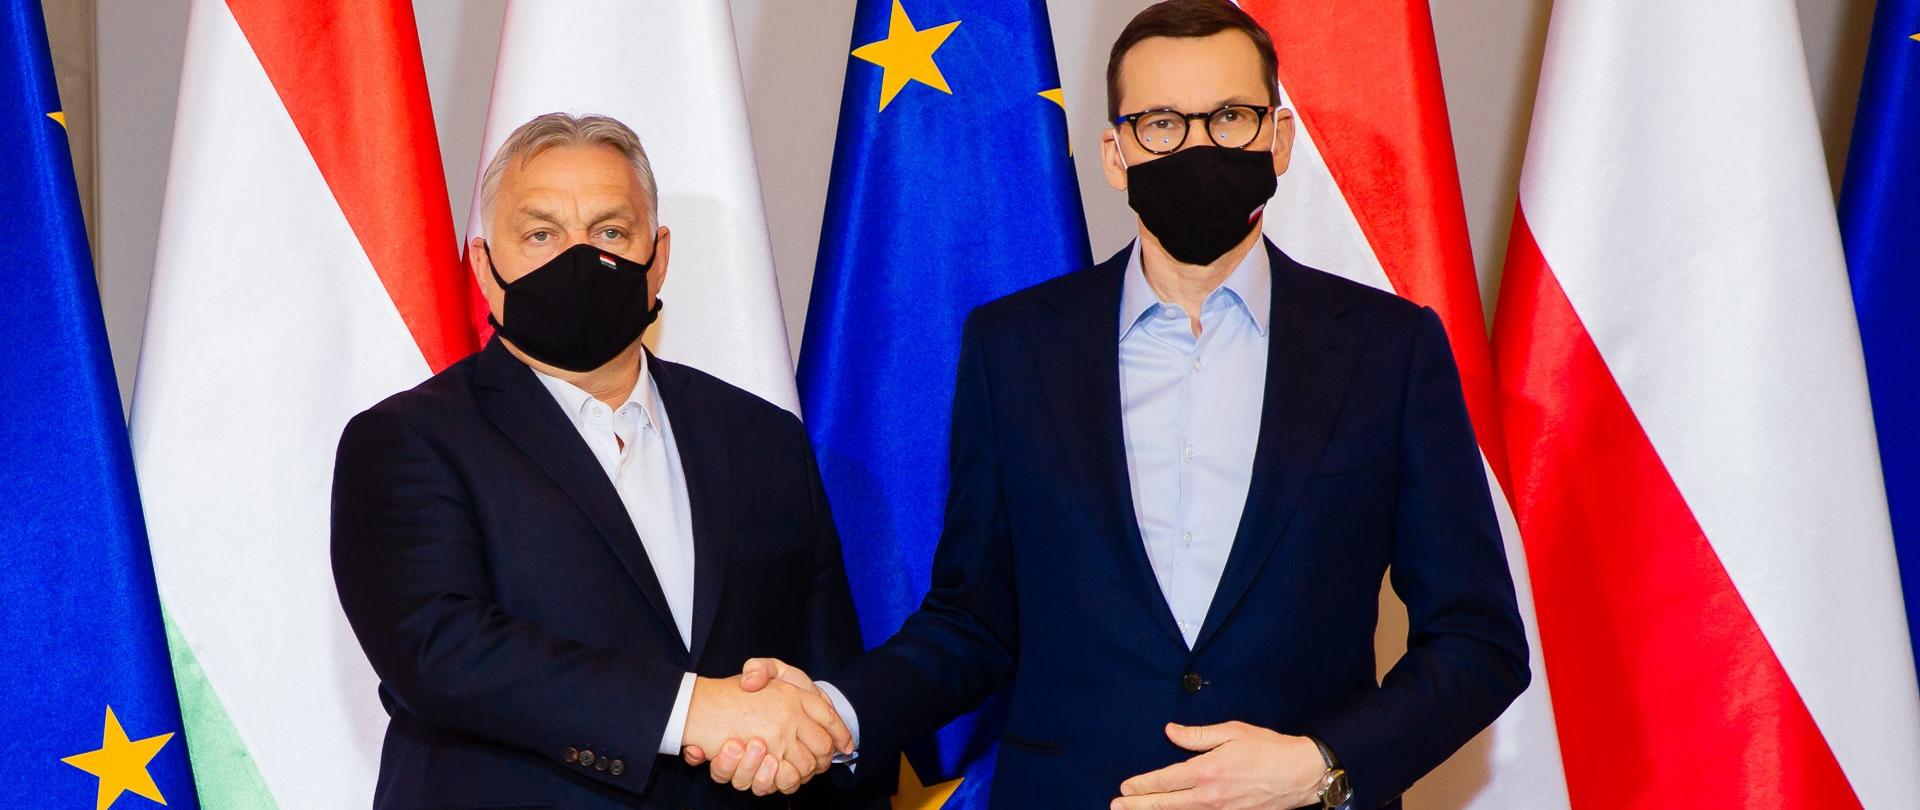 Prime Minister Morawiecki and Prime Minister of Hungary Viktor Orbán